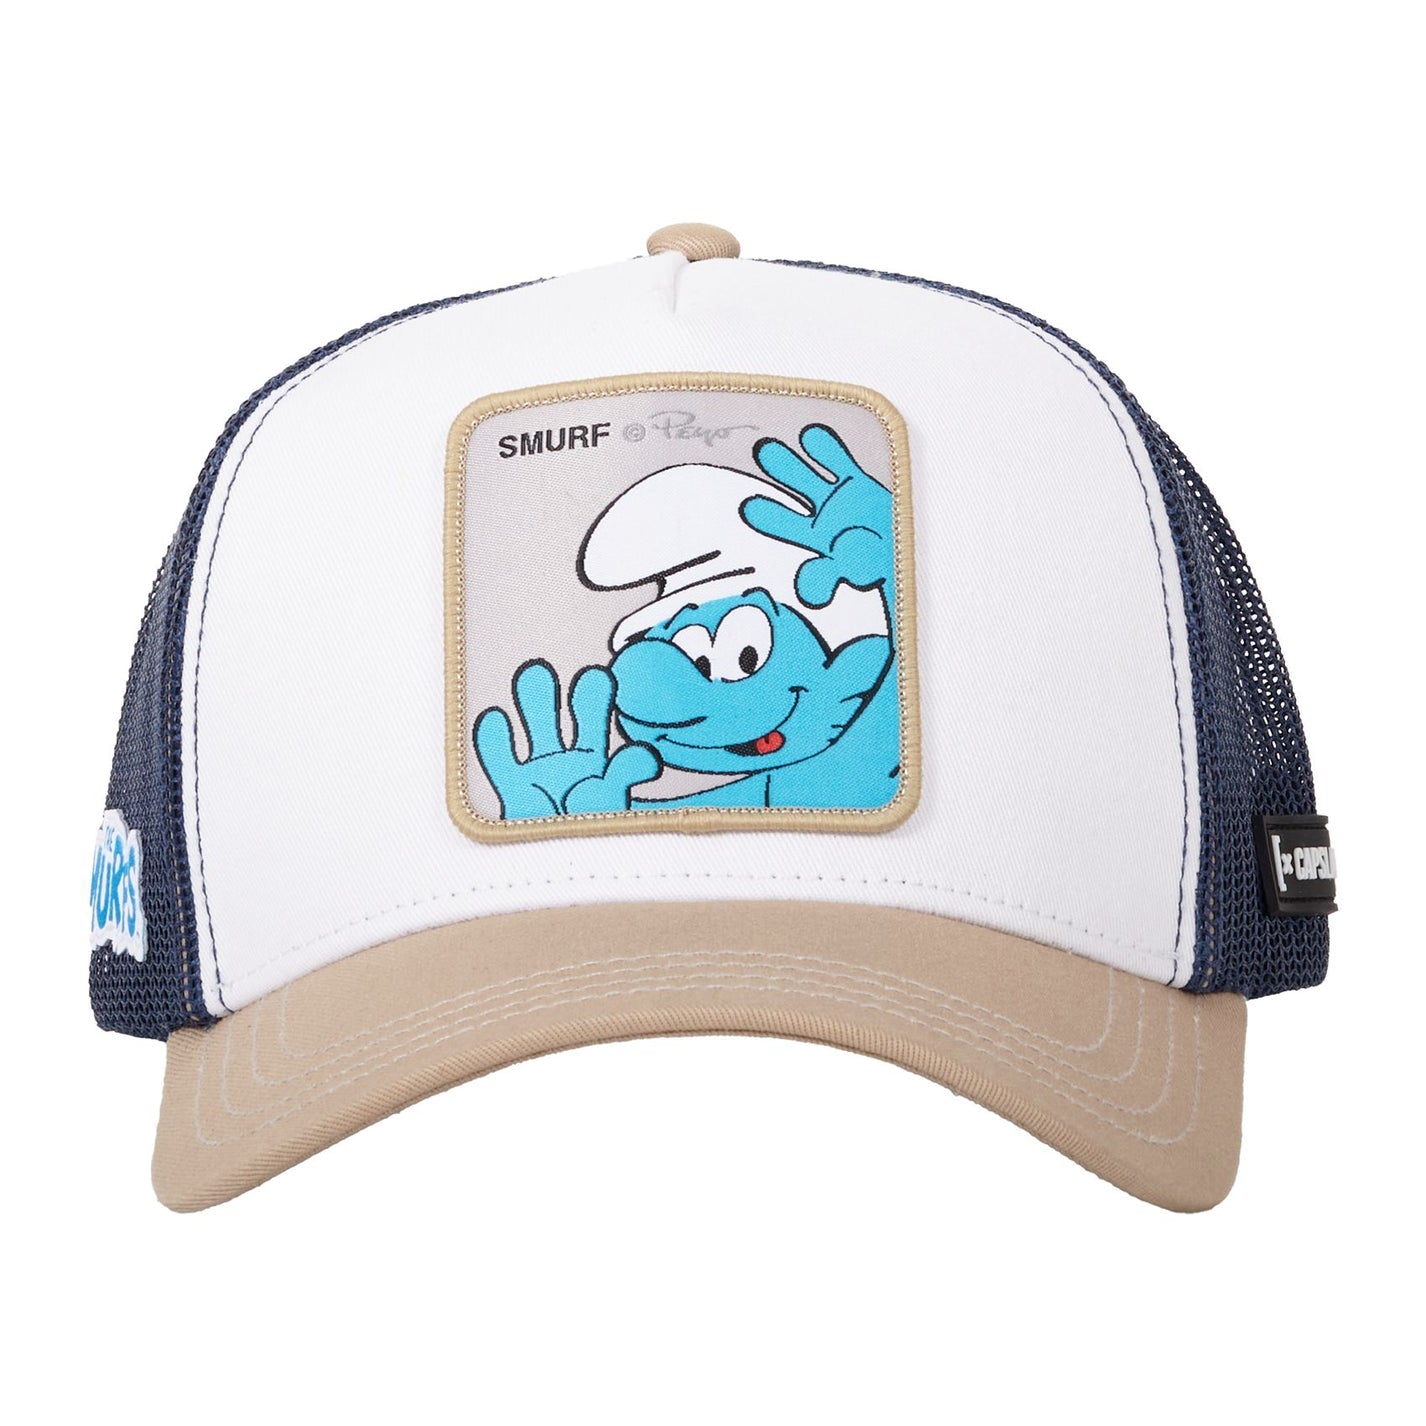 The Smurfs Classic Snapback Trucker hat